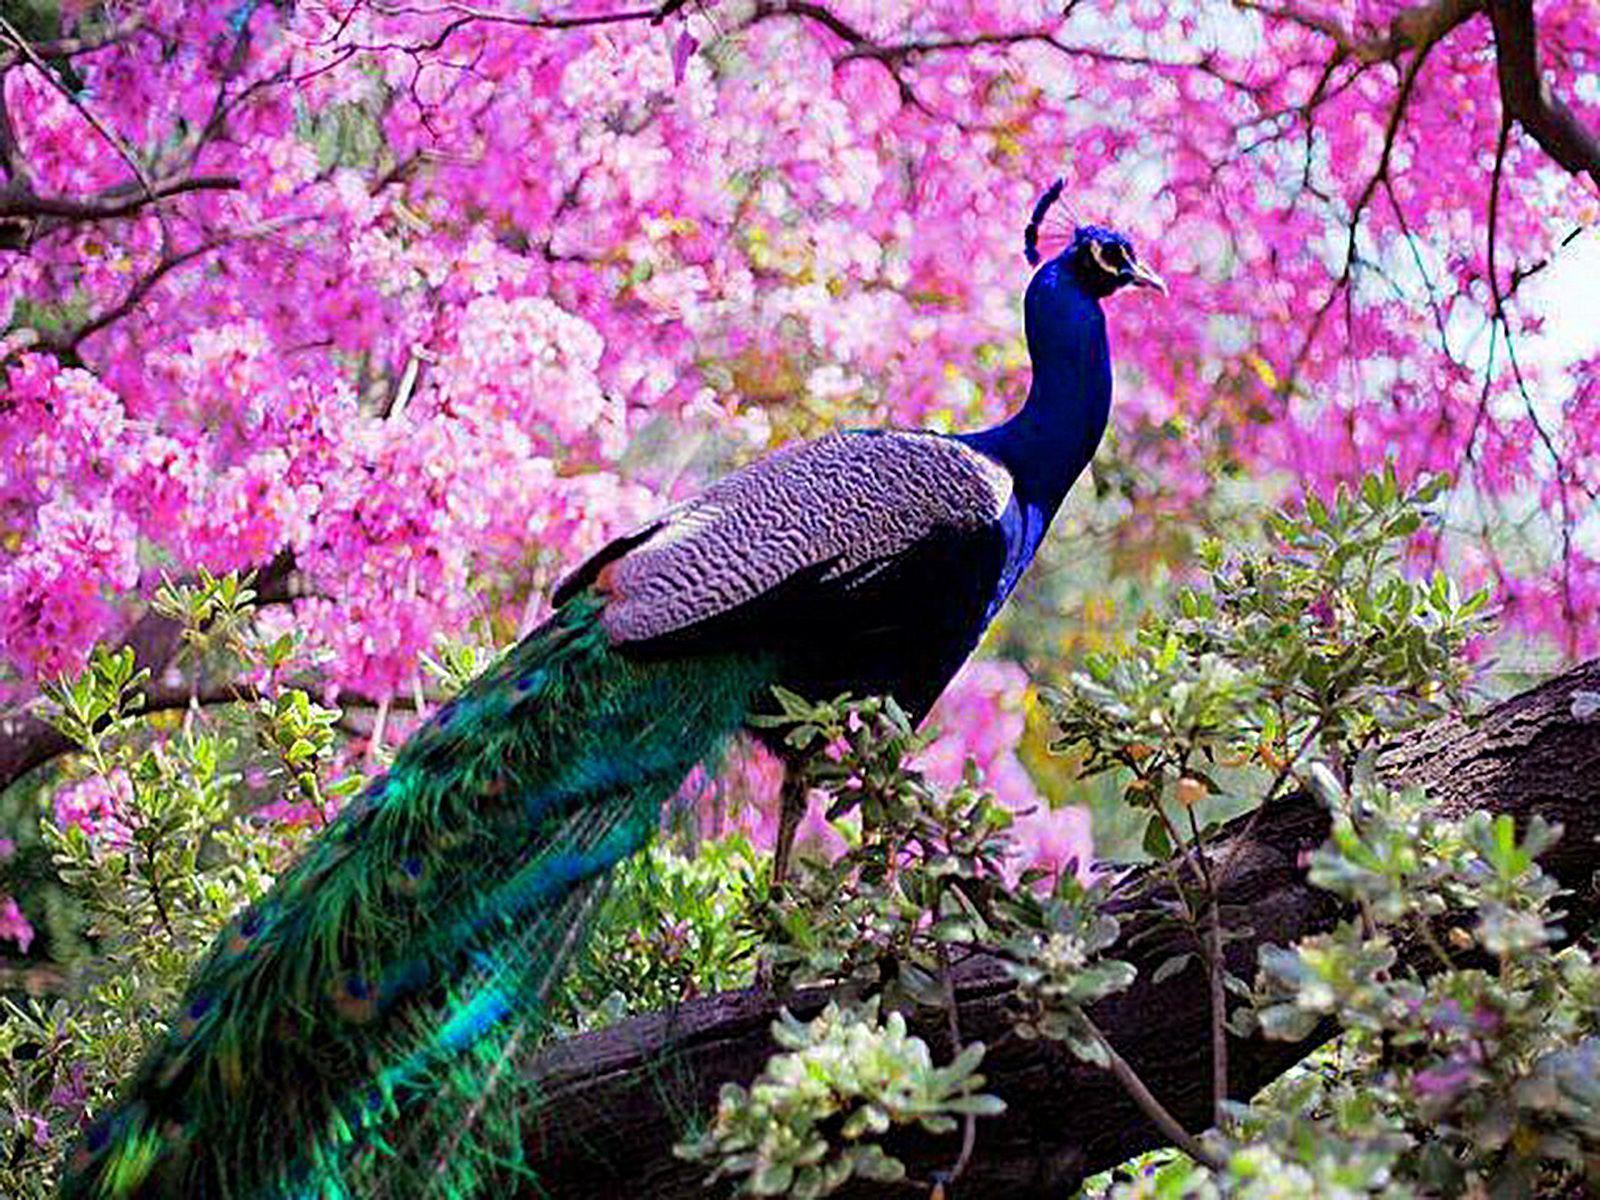 Peacock HD Wallpaper. Peacock Beautiful Image